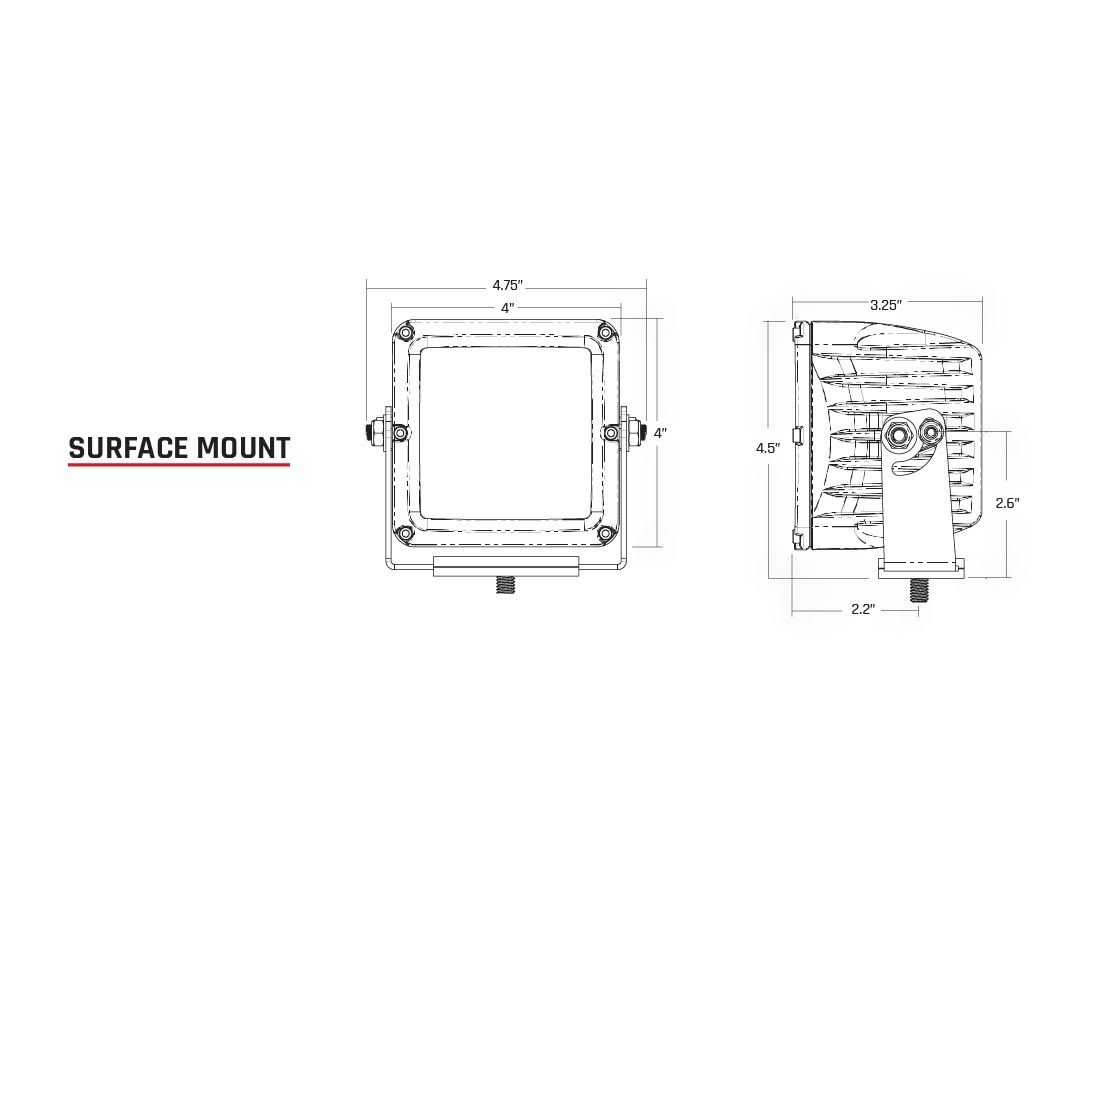 Rigid Industries Specter/Diffused Light D-XL Pro